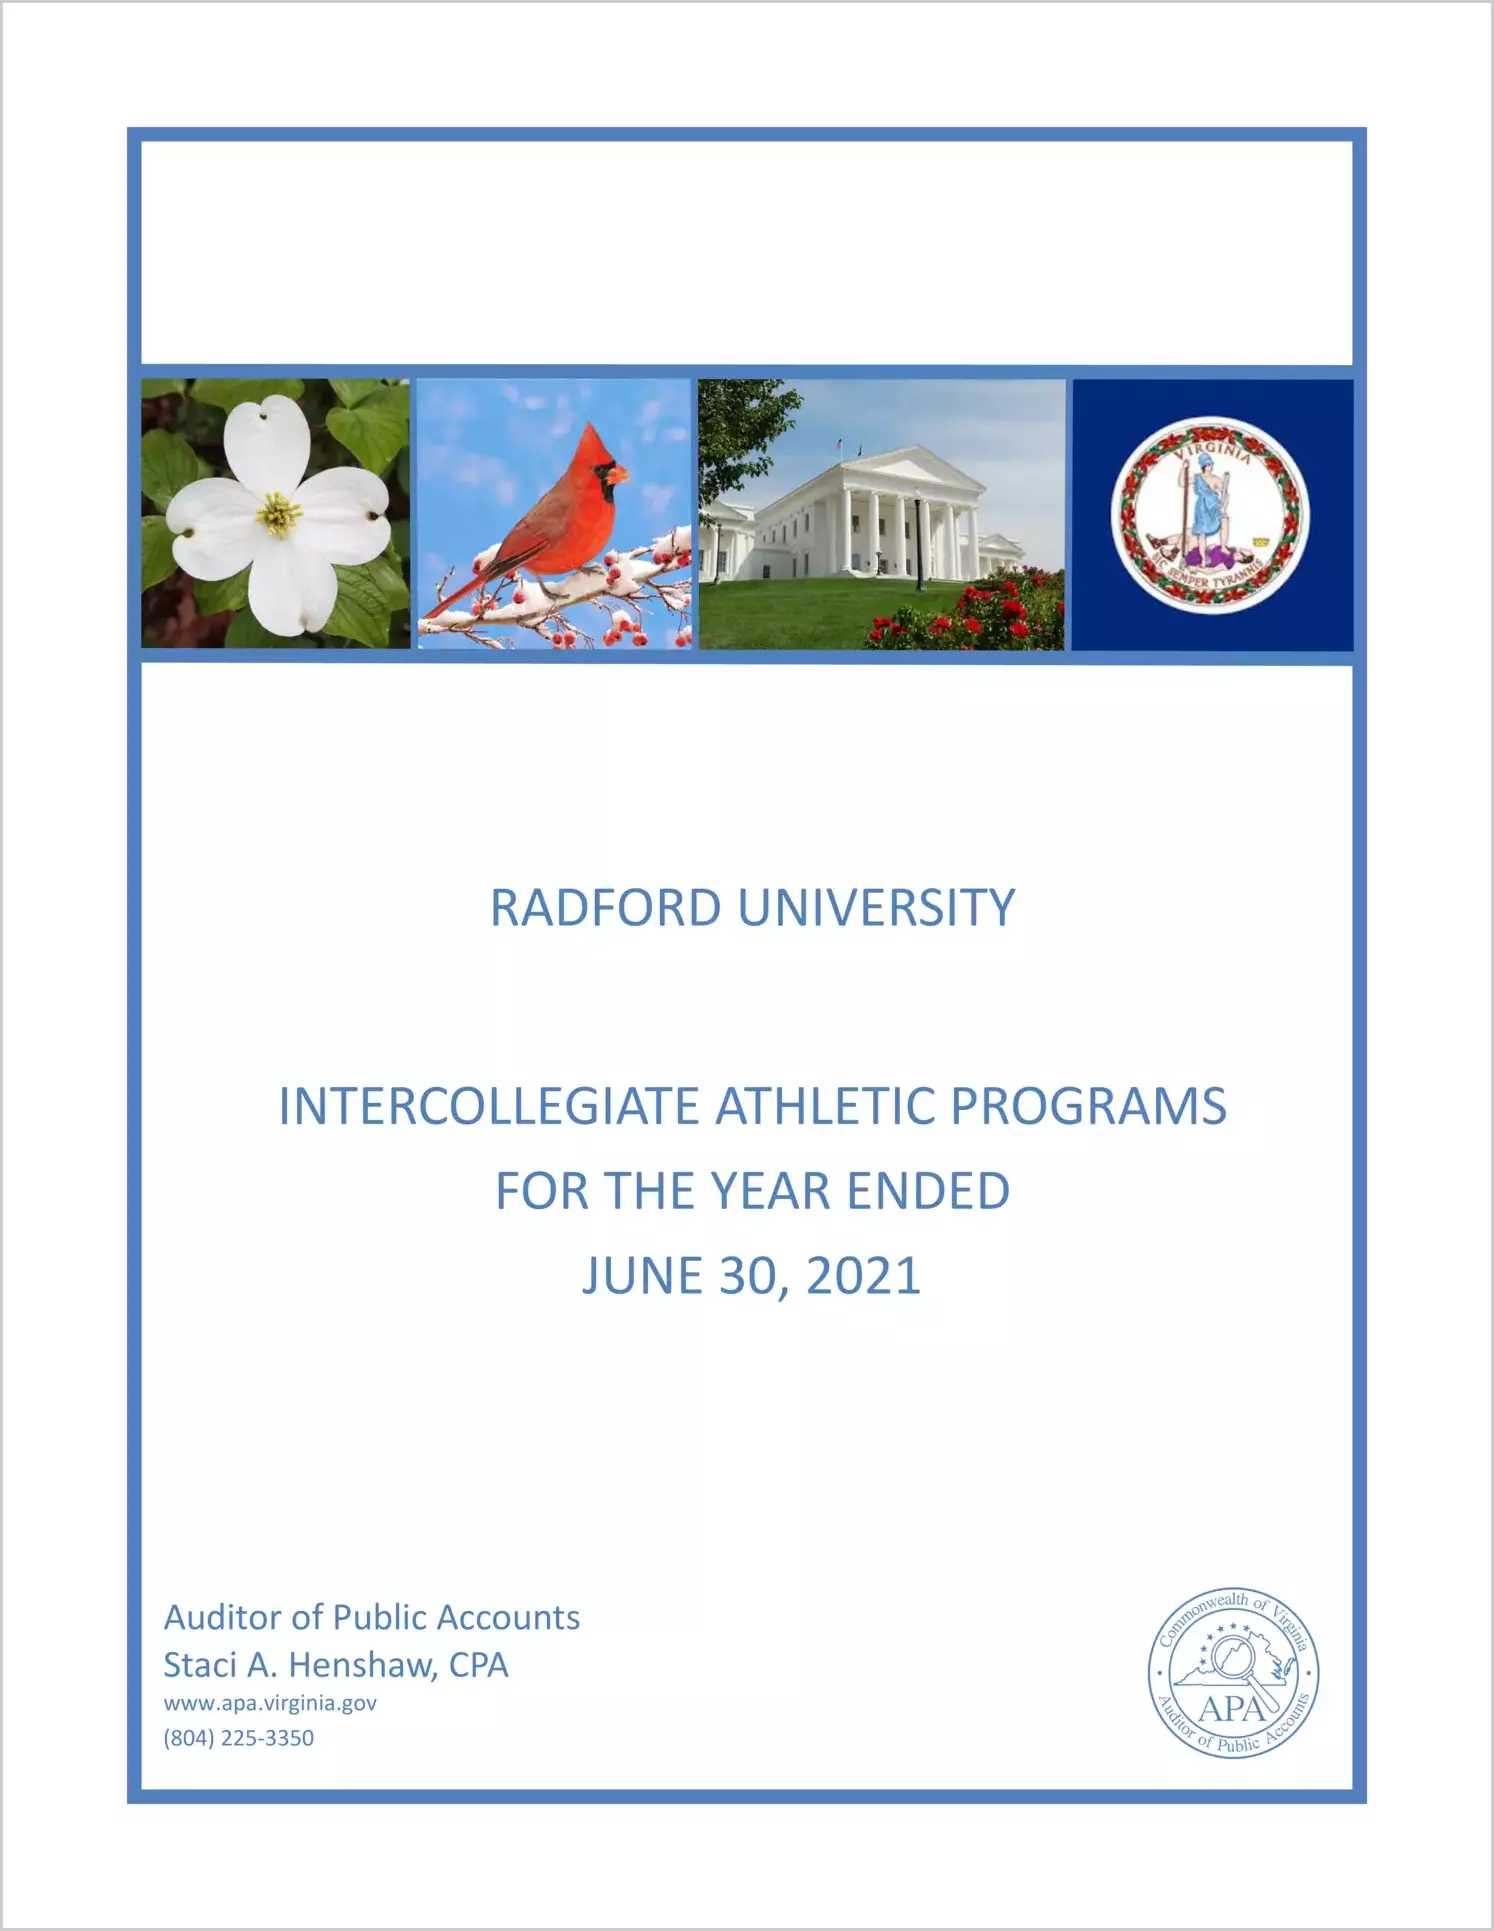 Radford University Intercollegiate Athletic Programs for the year ended June 30, 2021